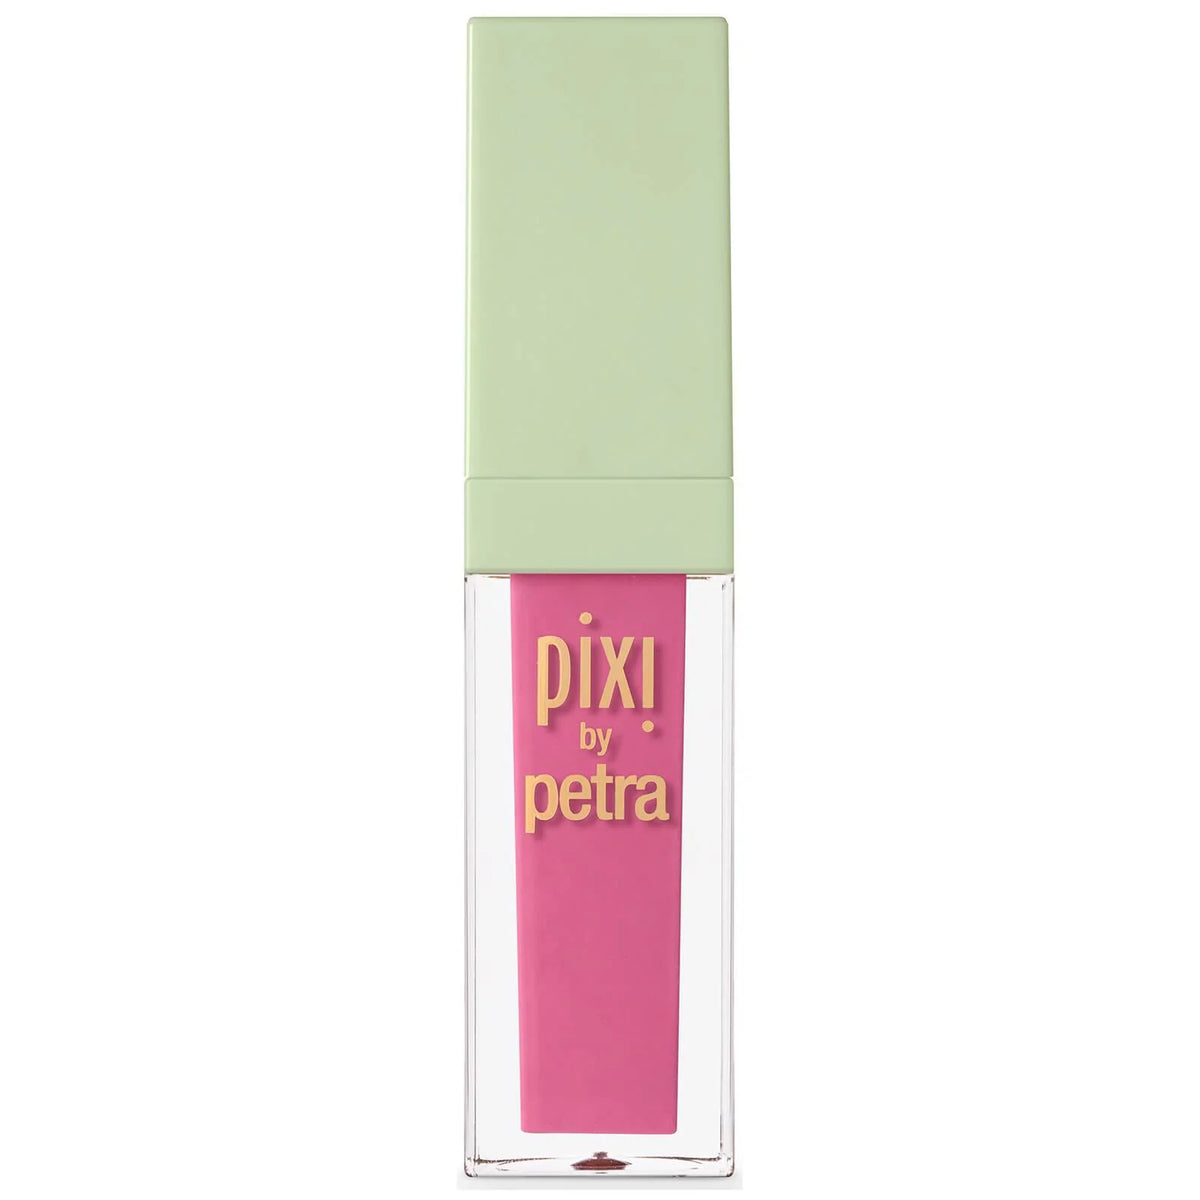 Pixi Matte Last Liquid Lipstick Color Prettiest Pink